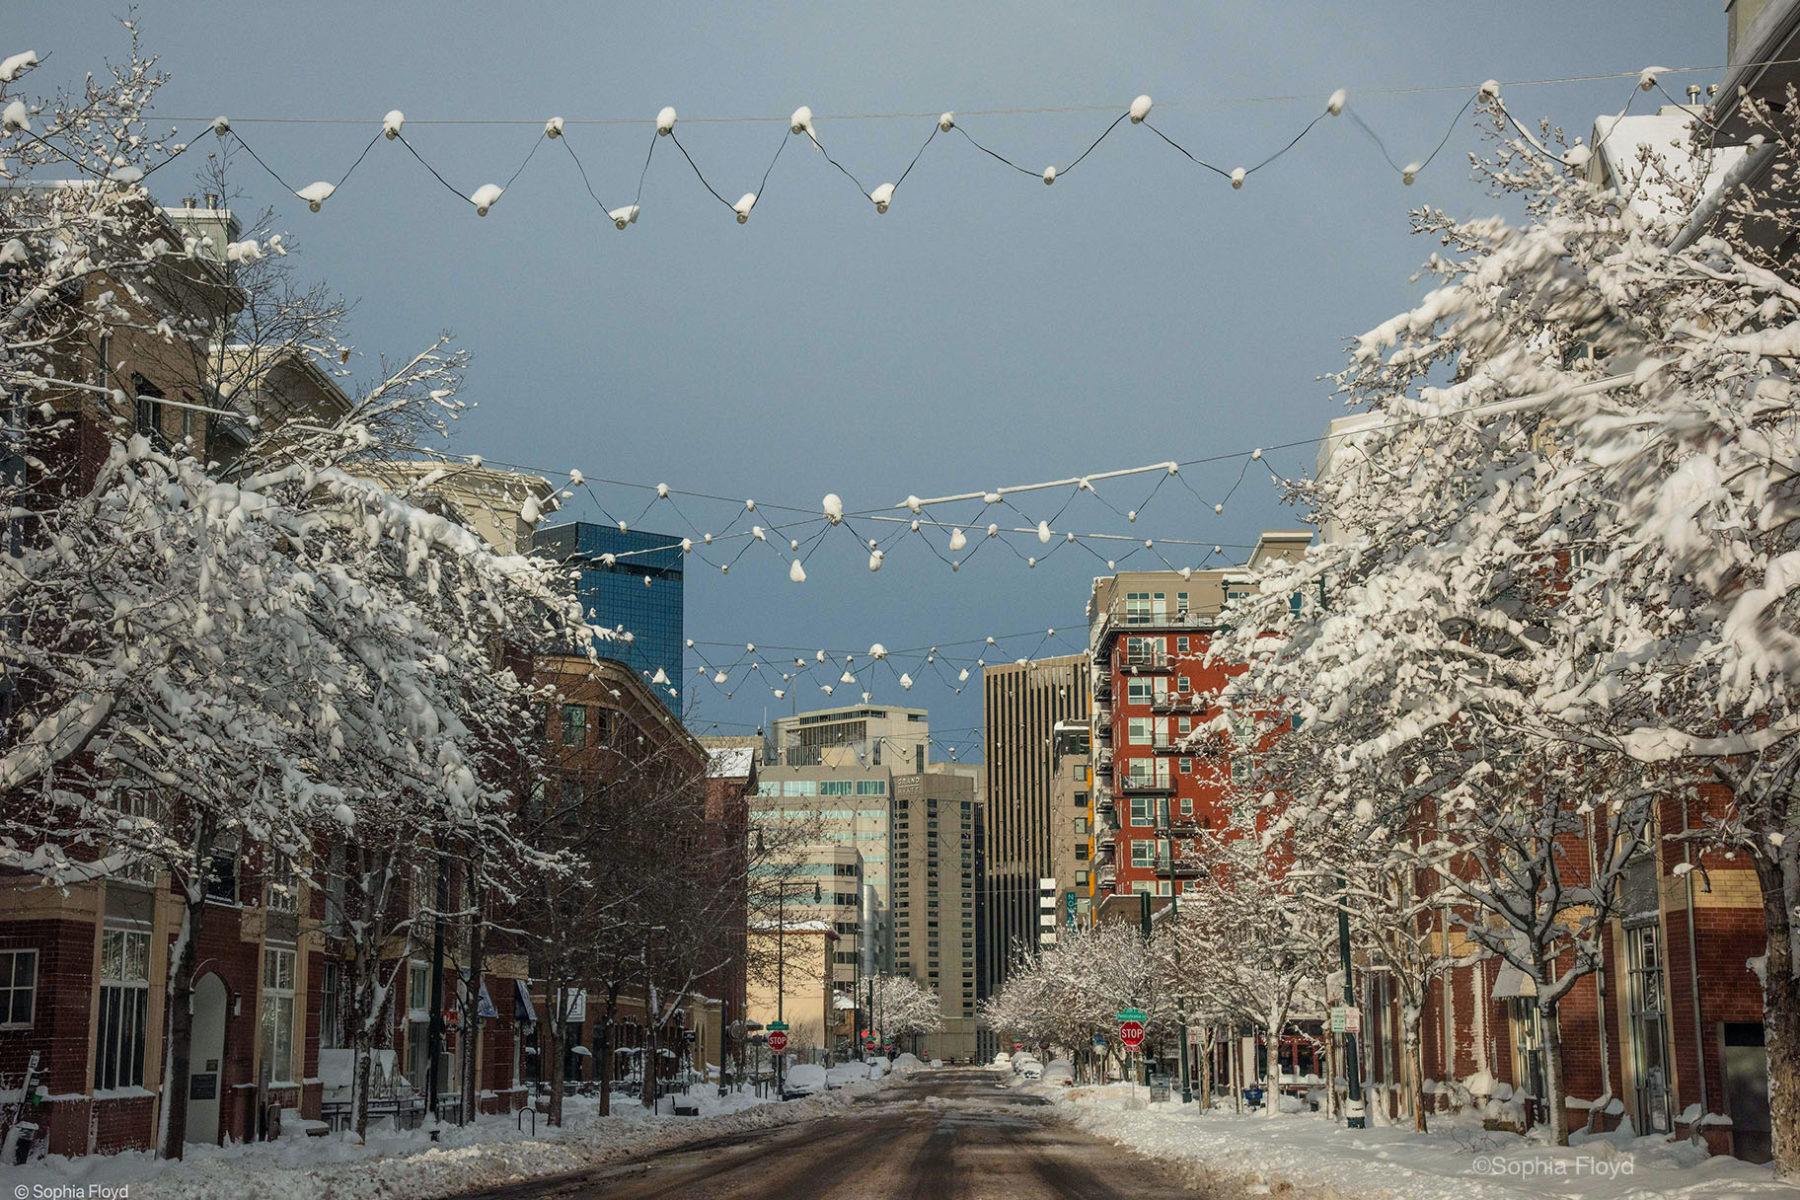 Denver photographer captures fine art imagery of lower downtown Denver.